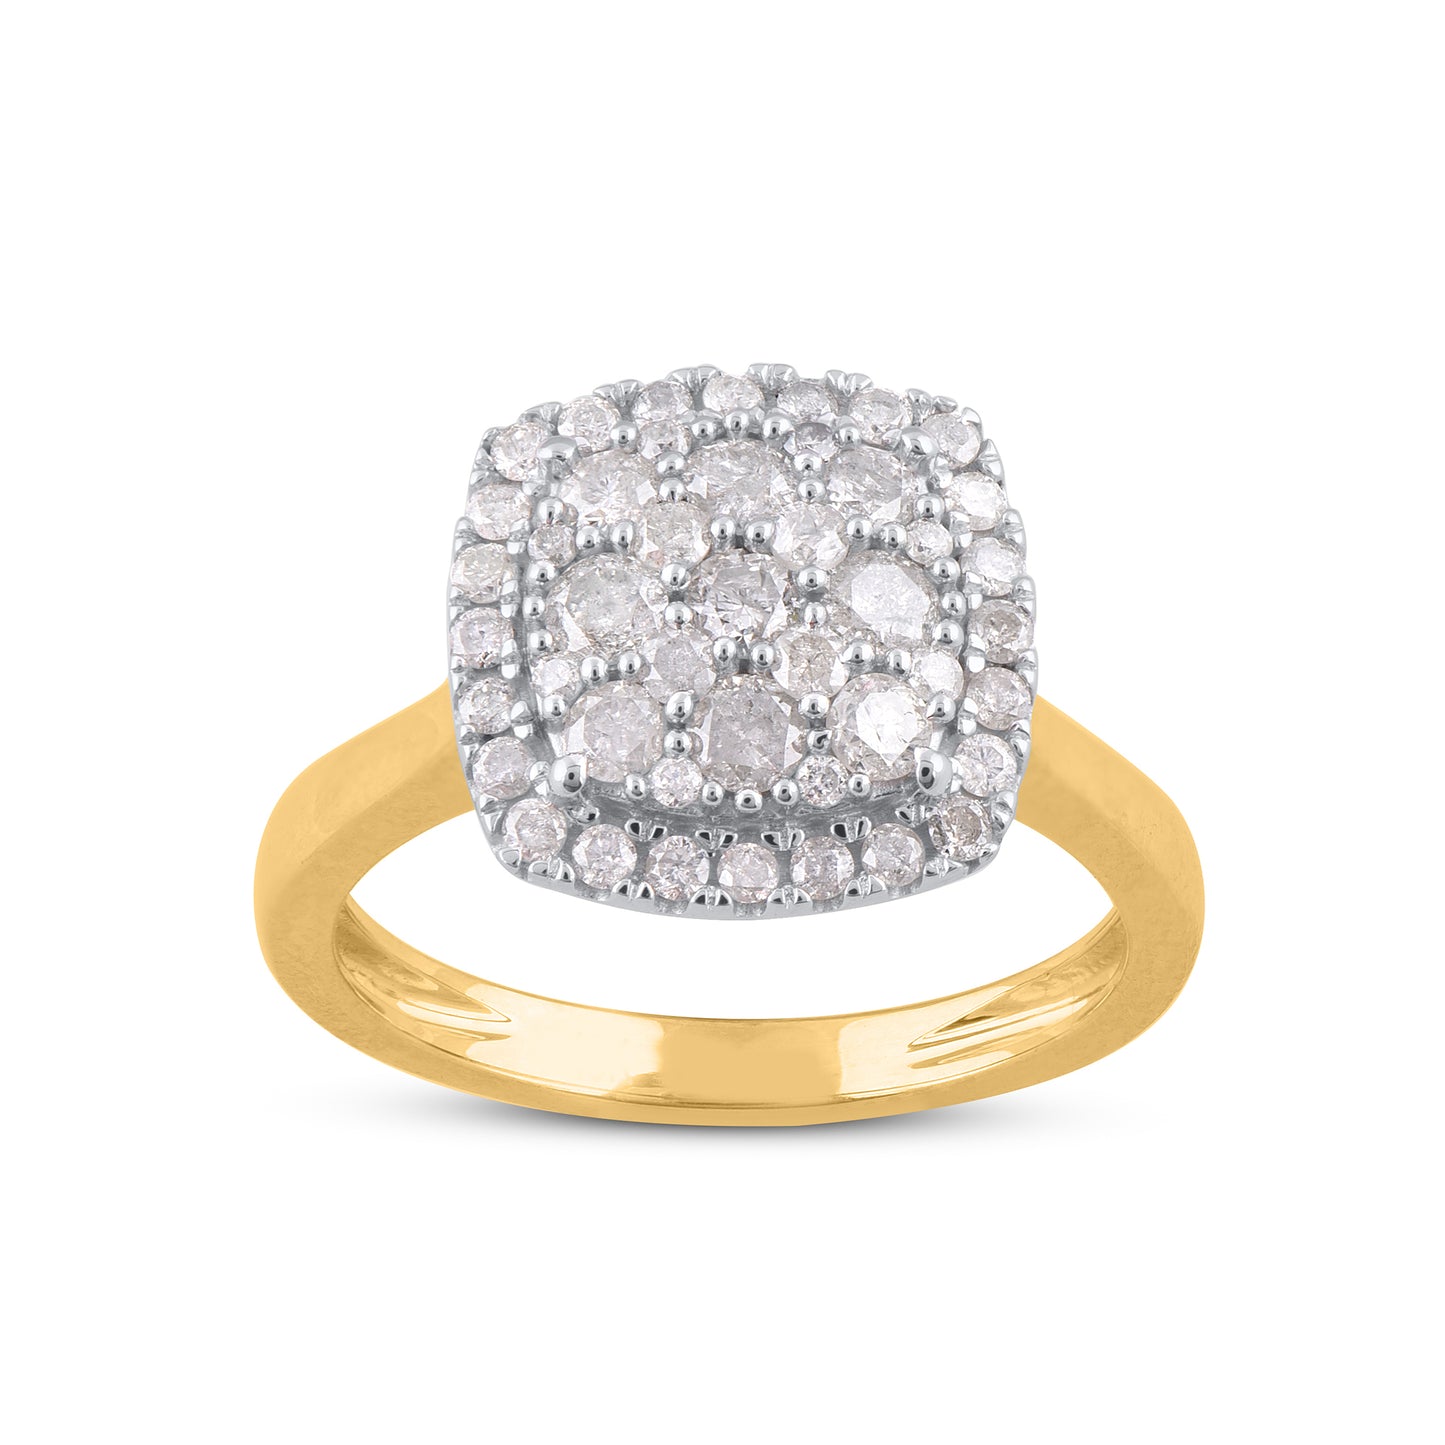 Cushion-Shape Cluster Flower Engagement Ring in 10k Gold